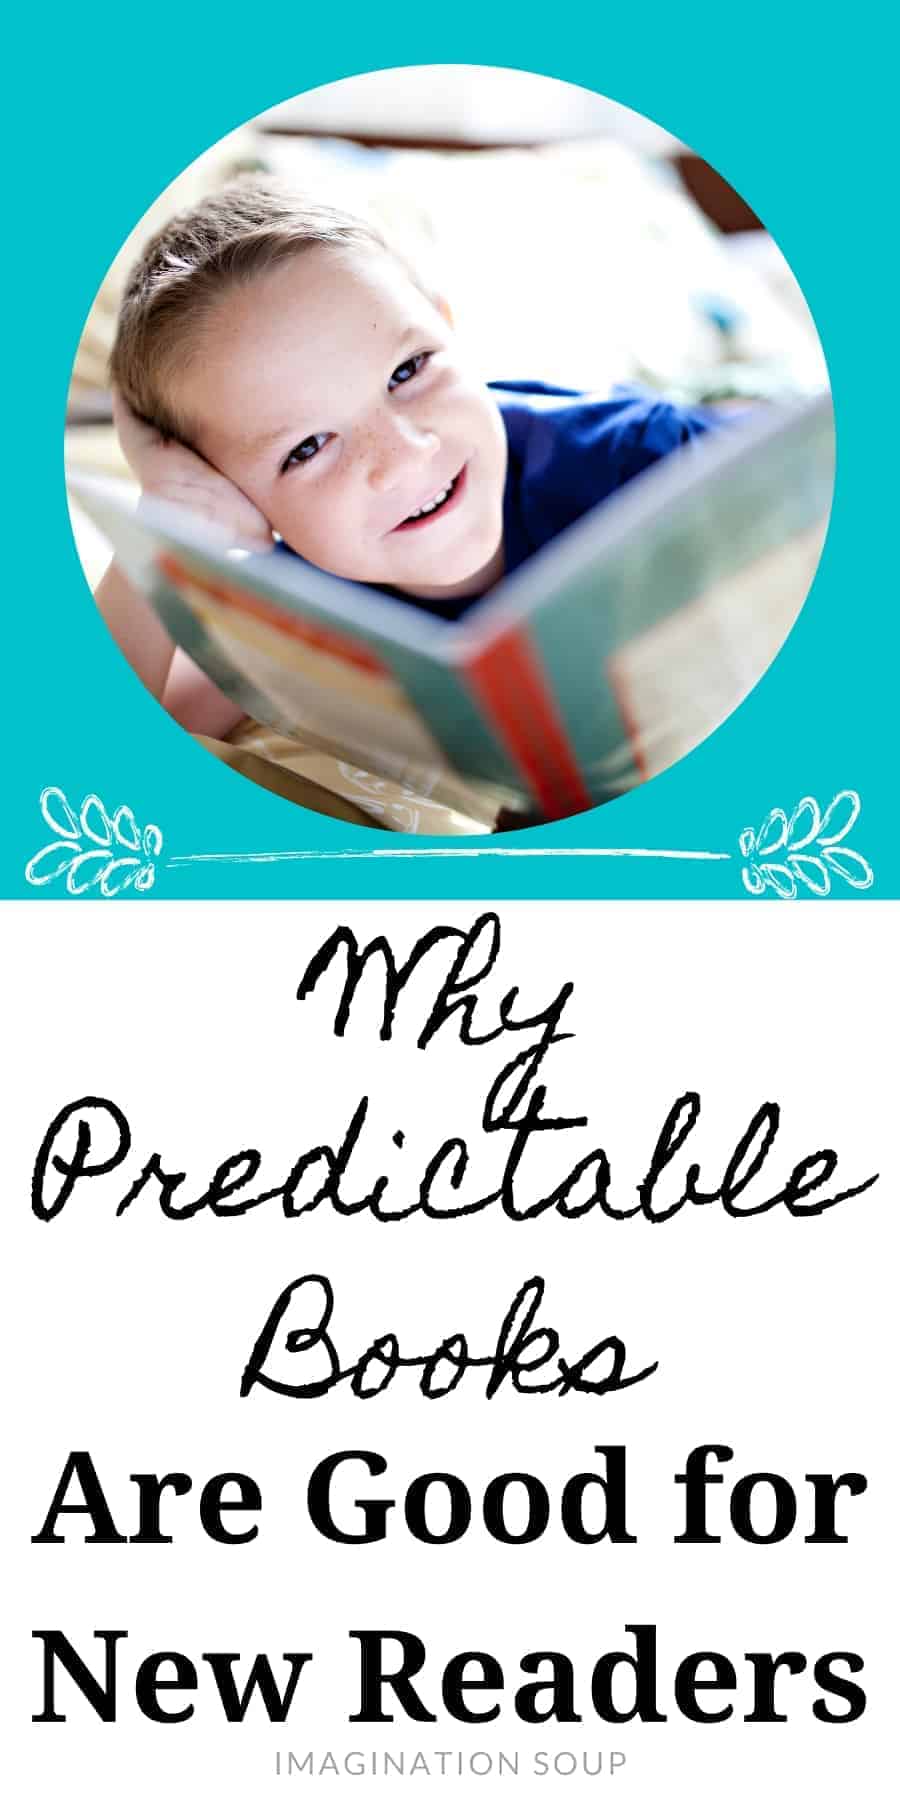 How Predictable Book Series Benefit Beginning Readers